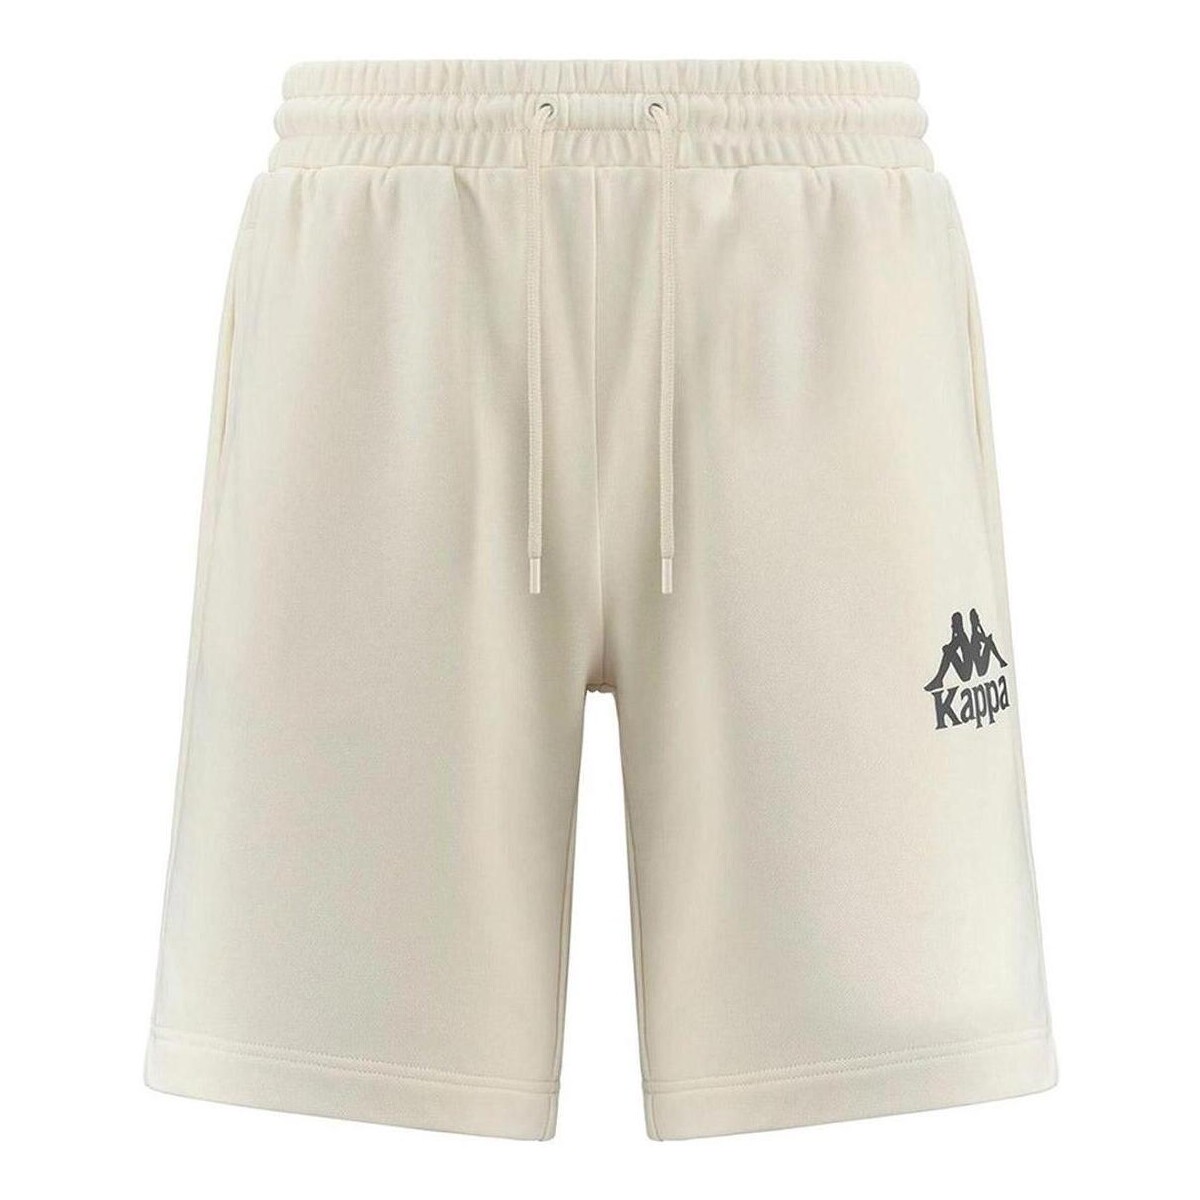 Textil Shorts / Bermudas Kappa  Branco